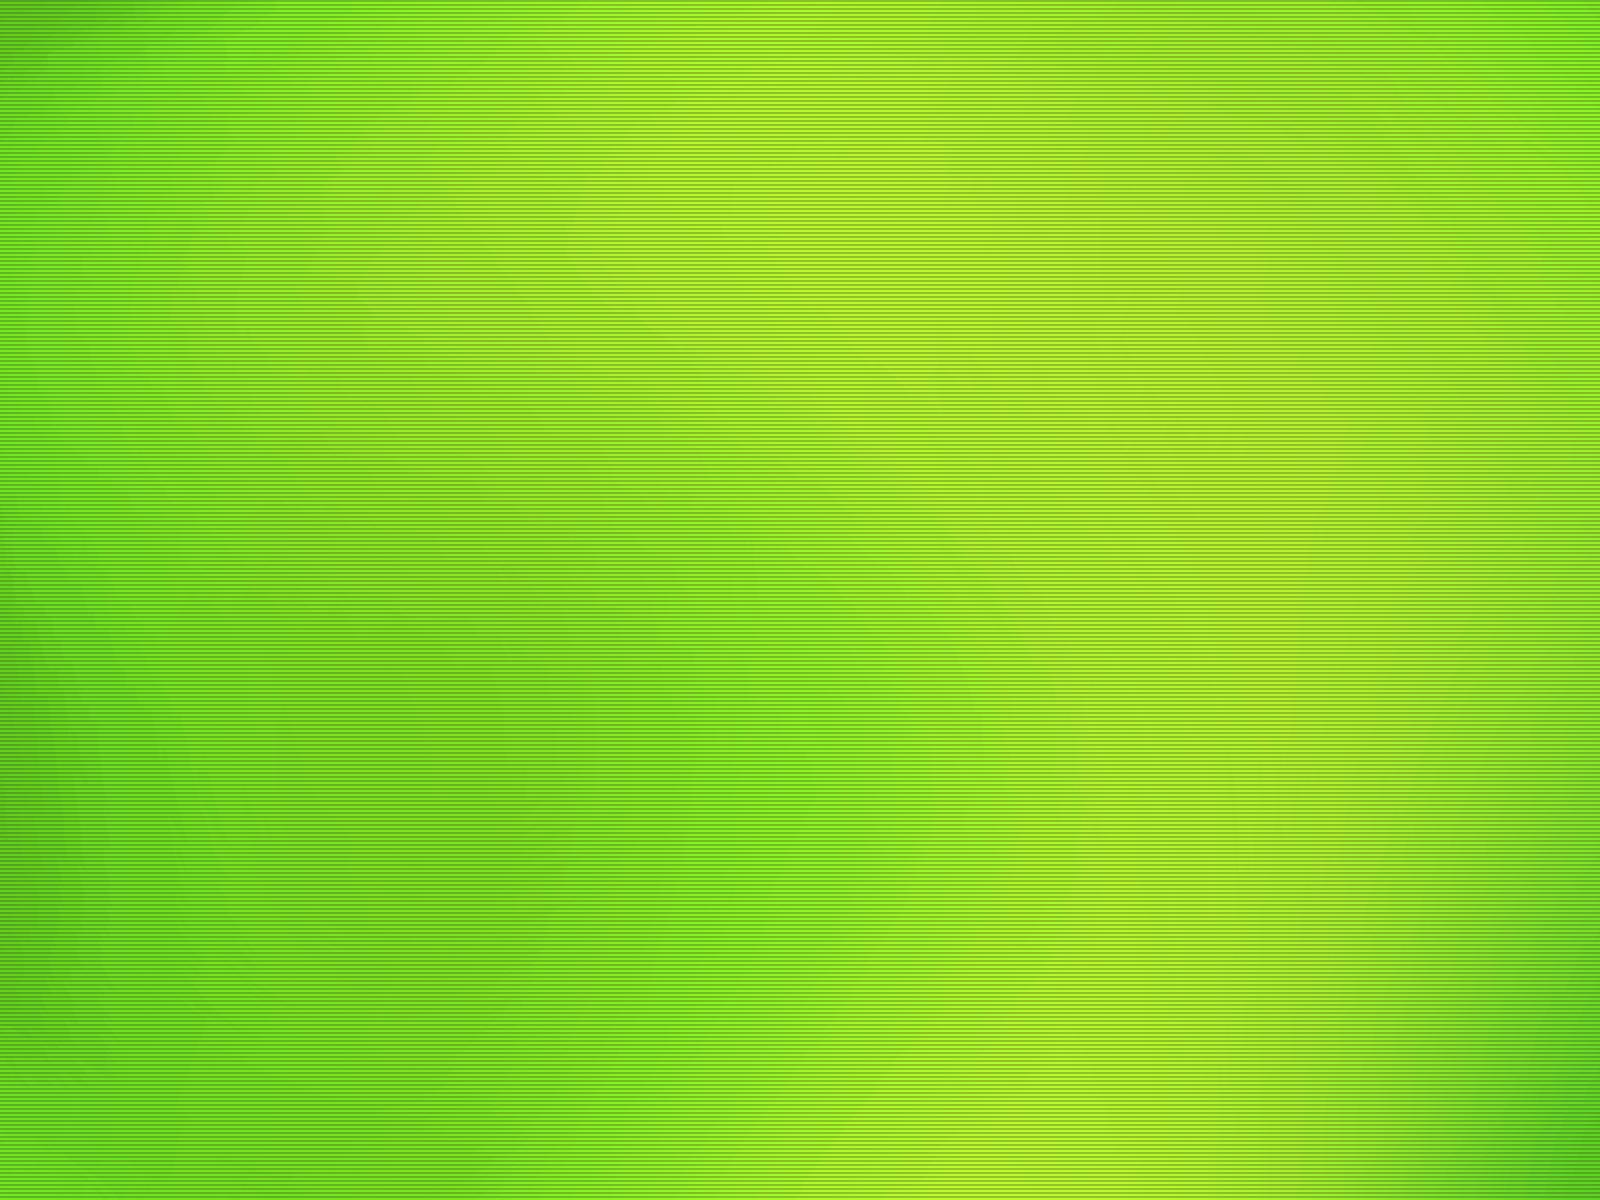 Wallpaper For > Light Green And White Background Design